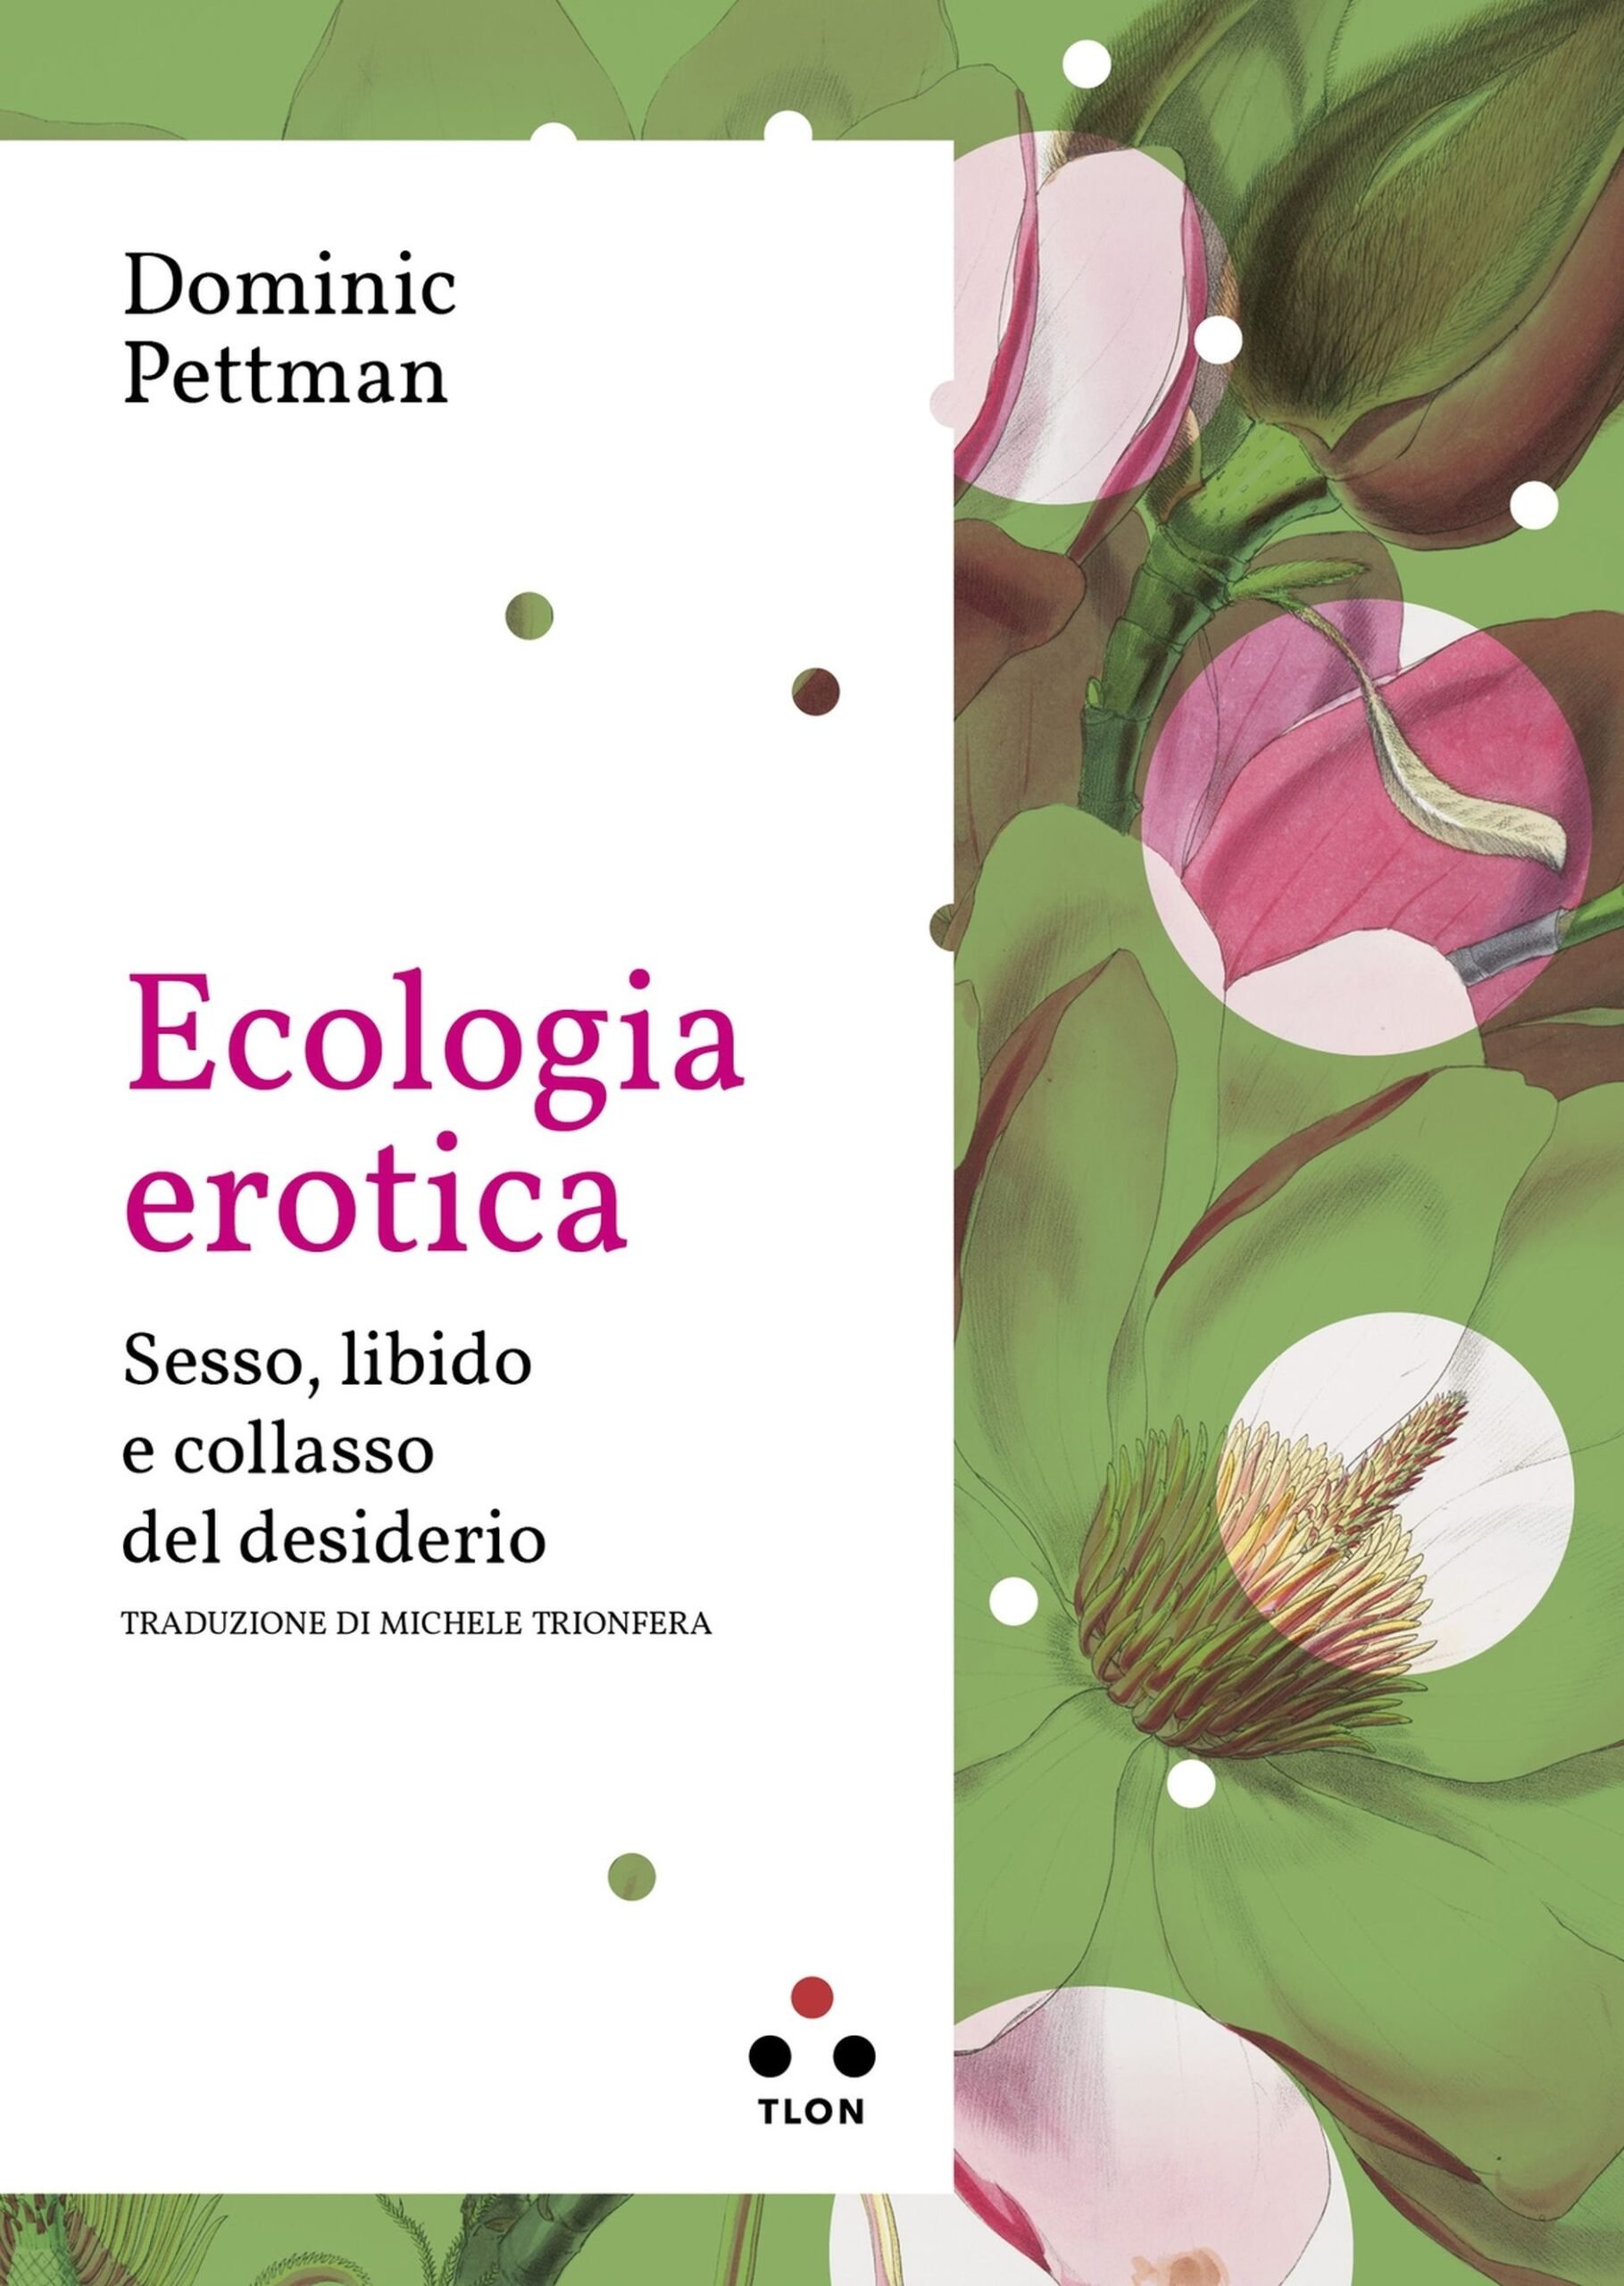 Dominic Pettman, Ecologia erotica, copertina